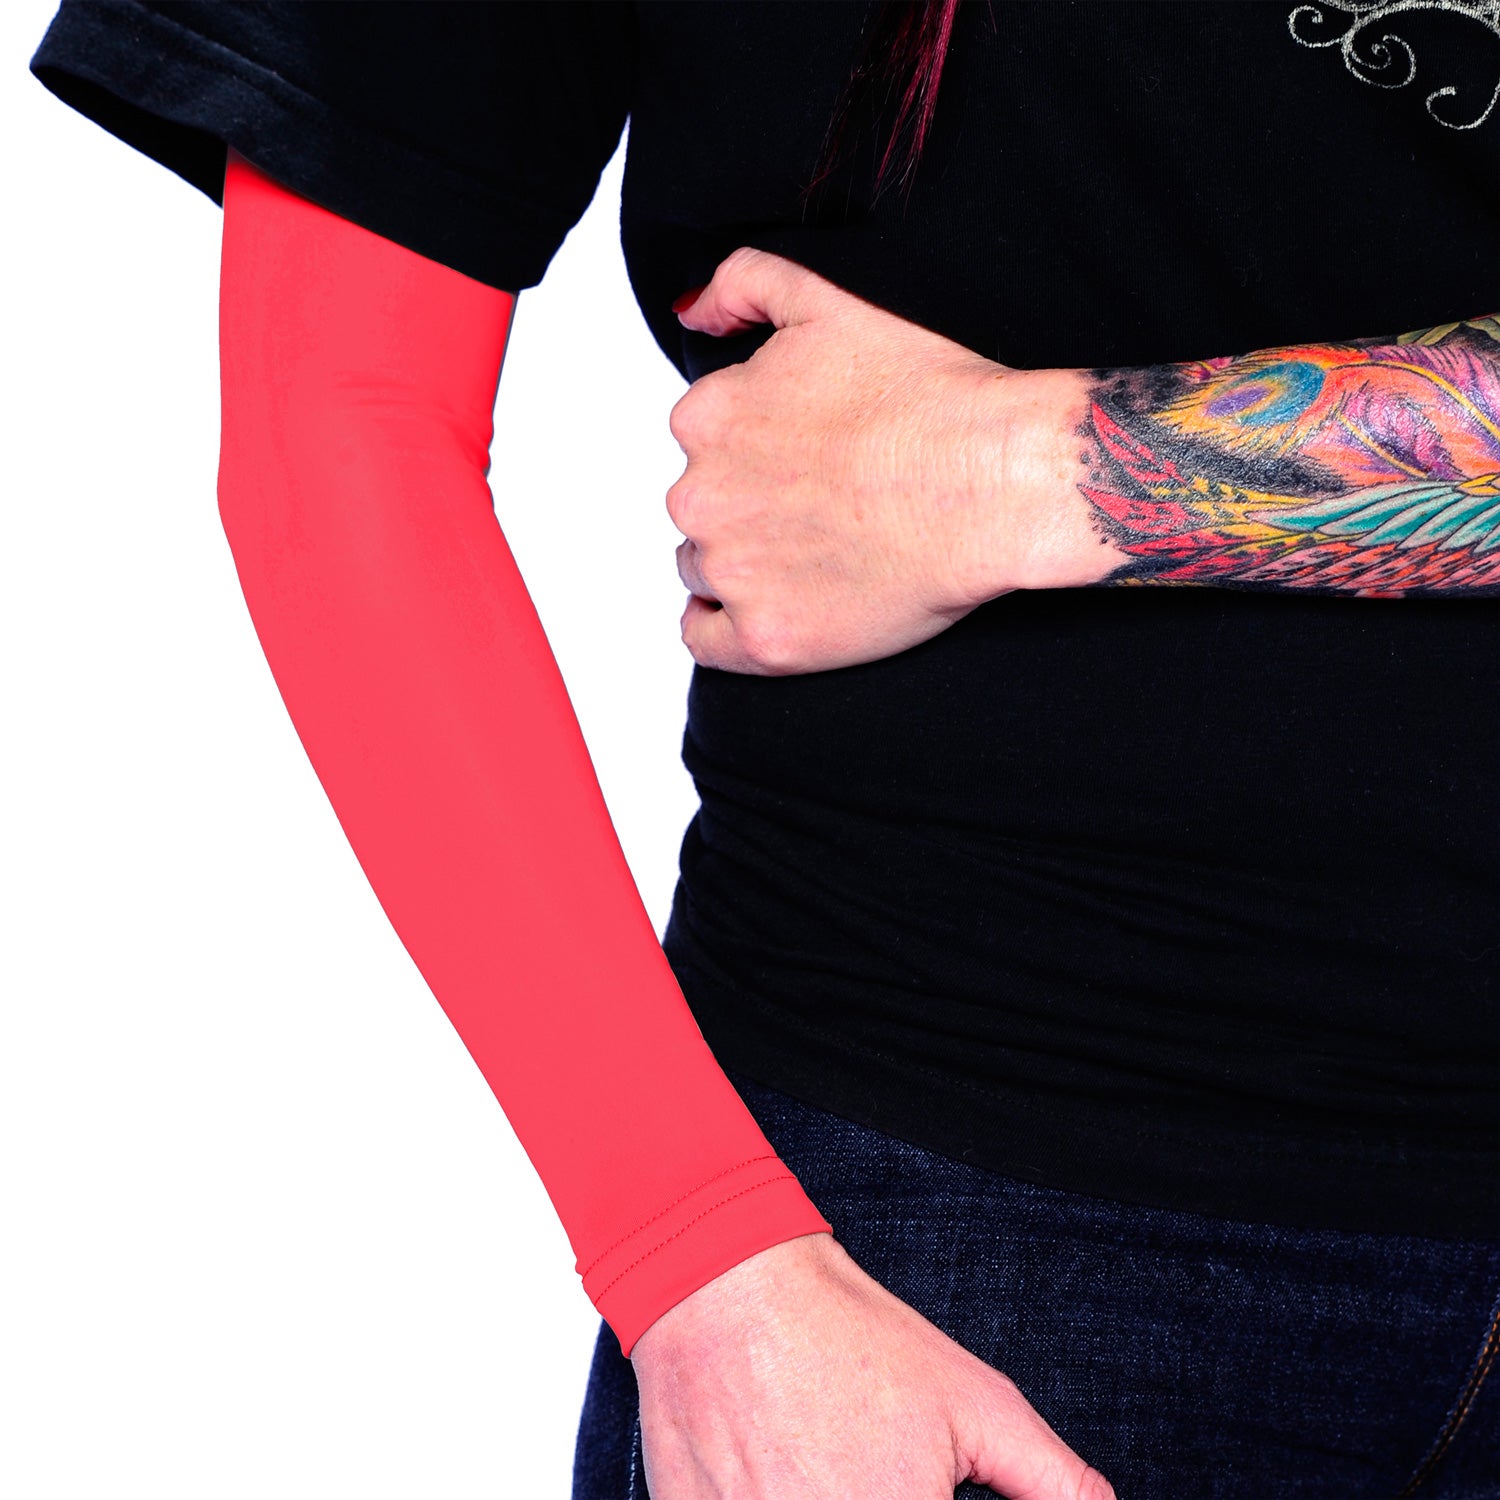 70 Red Ink Tattoo Designs For Men  Masculine Ink Ideas  Red ink tattoos  Full sleeve tattoos Sleeve tattoos